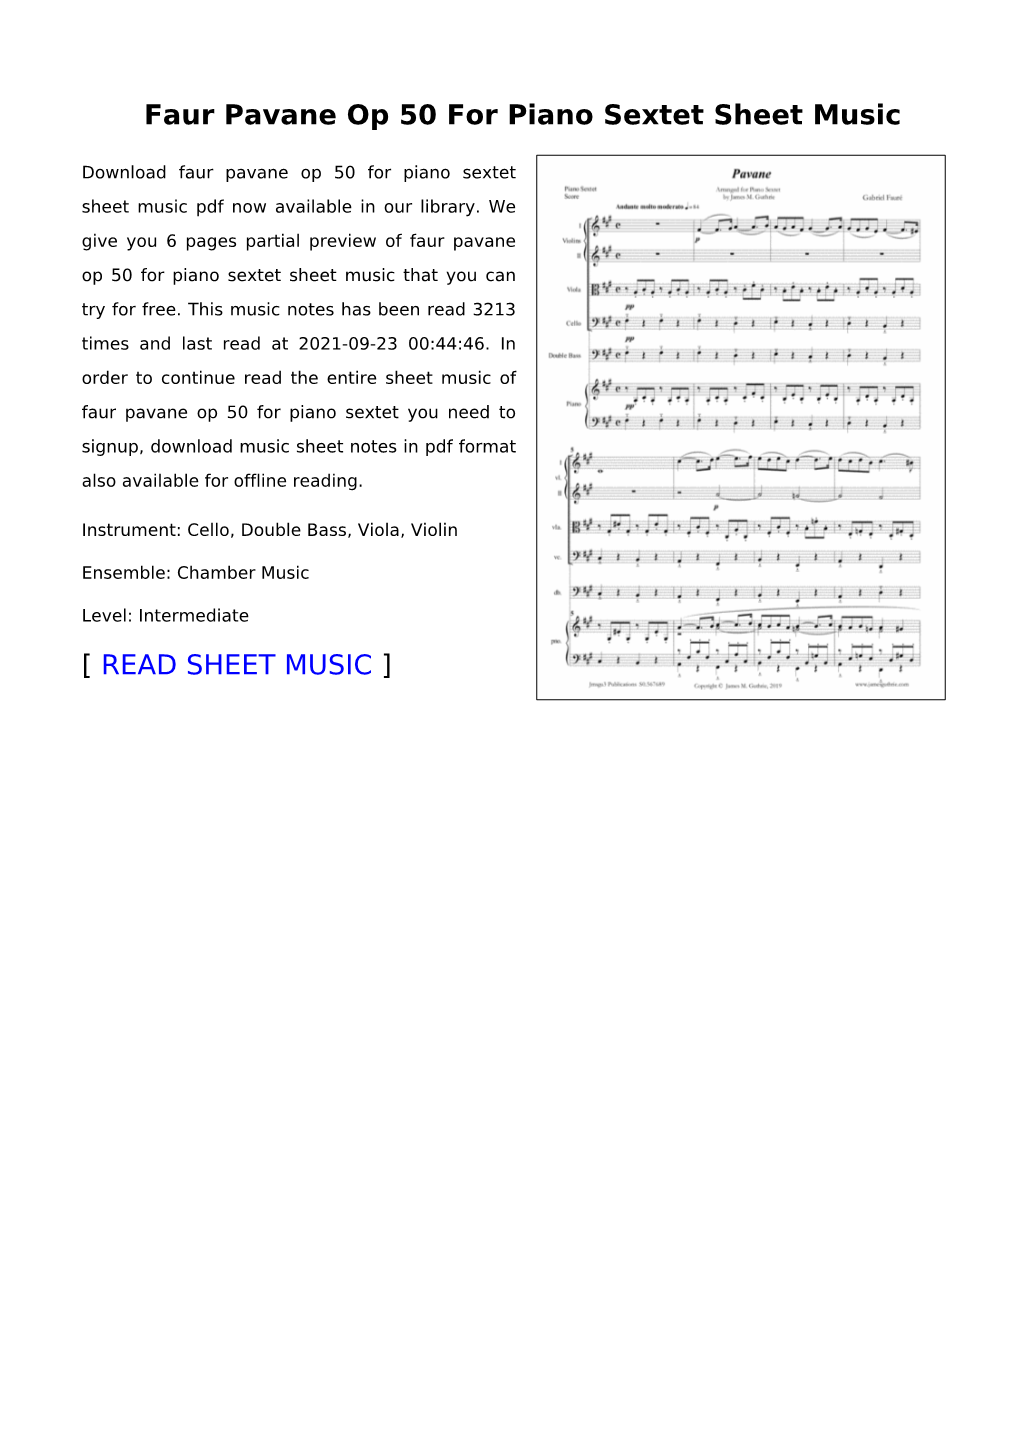 Faur Pavane Op 50 for Piano Sextet Sheet Music